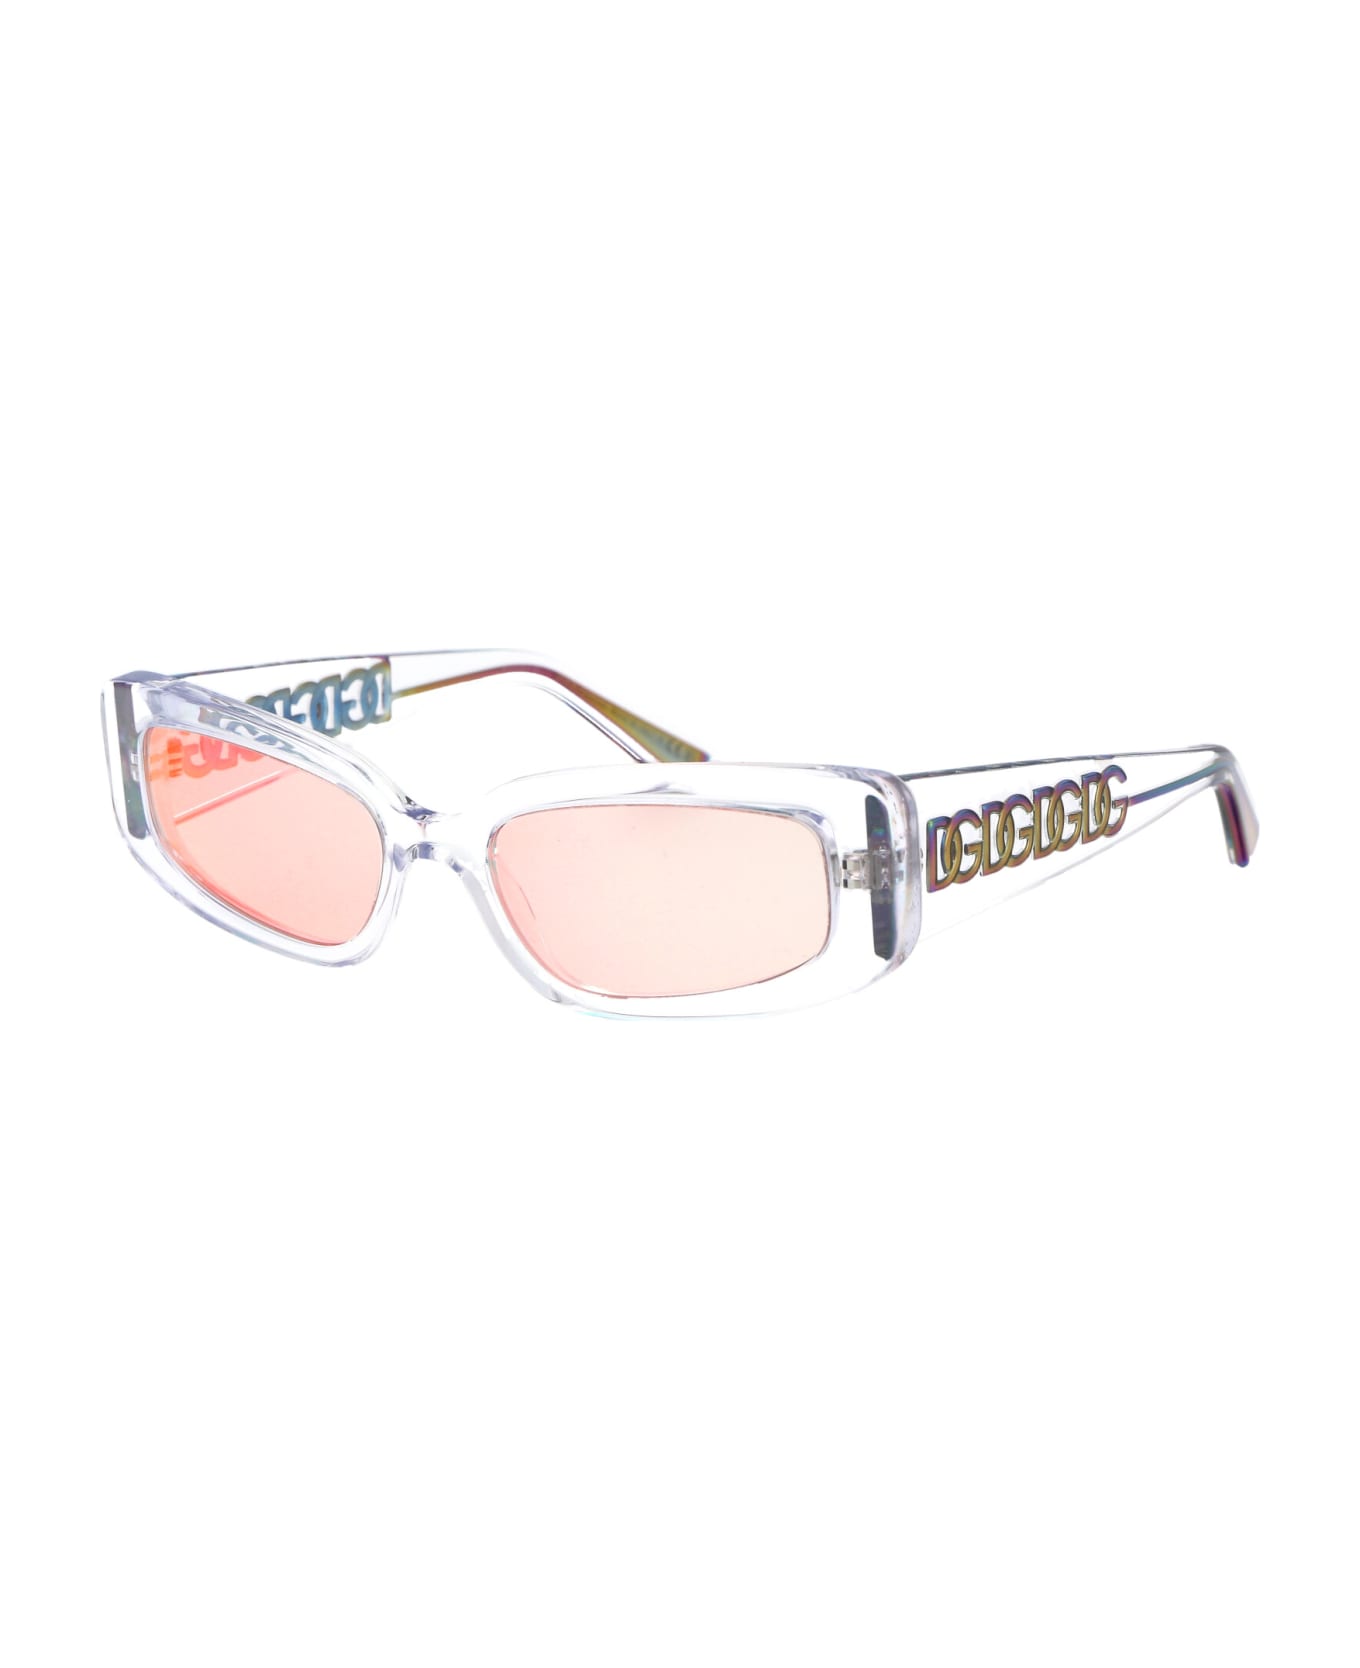 Dolce & Gabbana Eyewear 0dg4445 Sunglasses - 31336Q Crystal